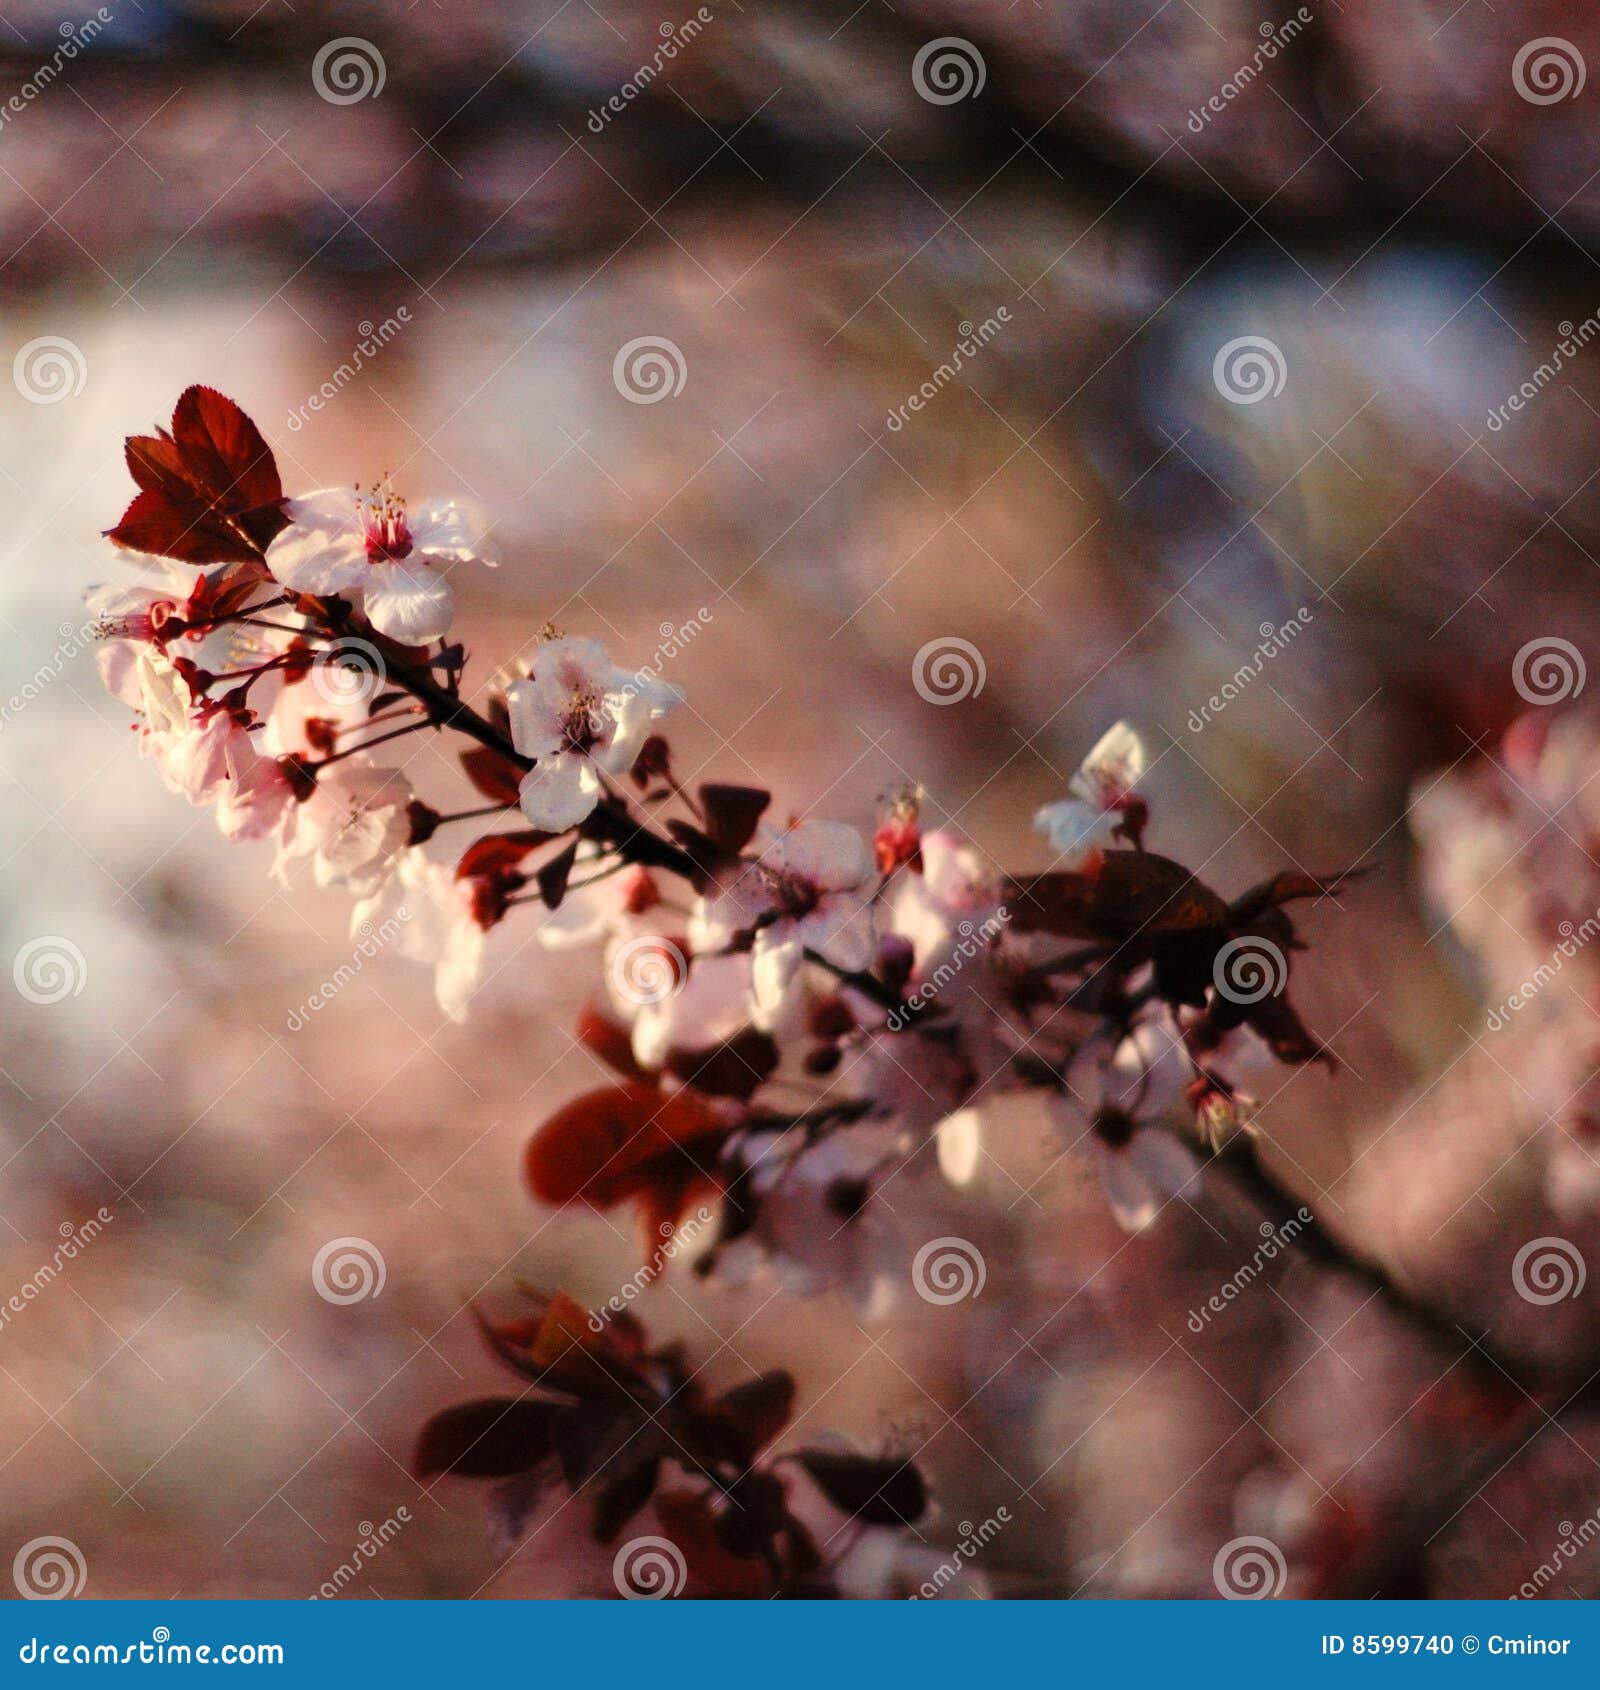 cherry blossom/ sakura